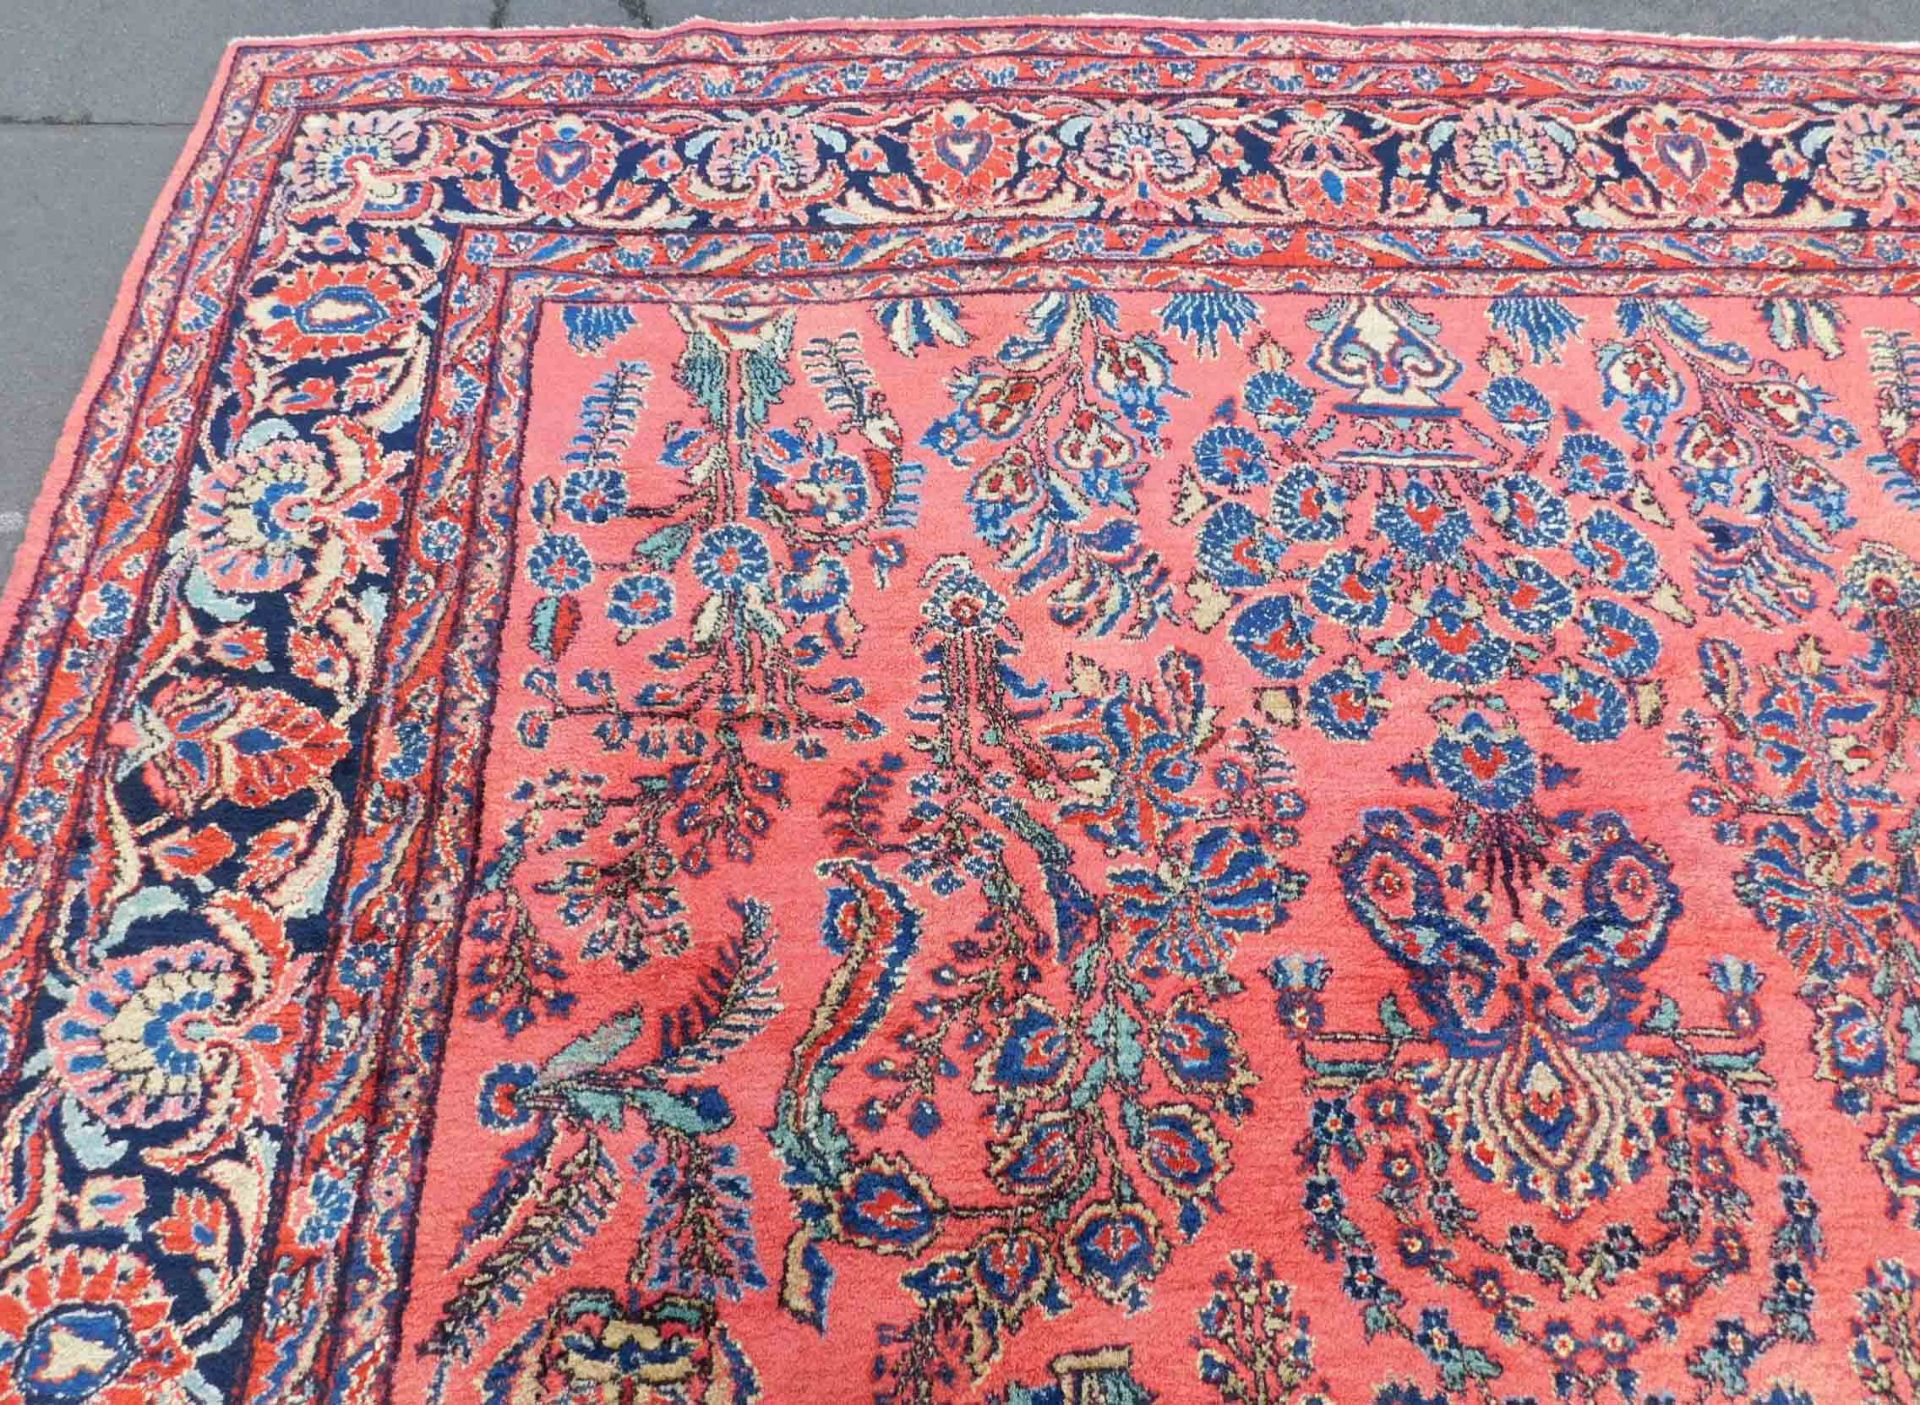 Saruk Persian carpet. "American Saruk". Iran. Around 100 years old. - Image 6 of 8